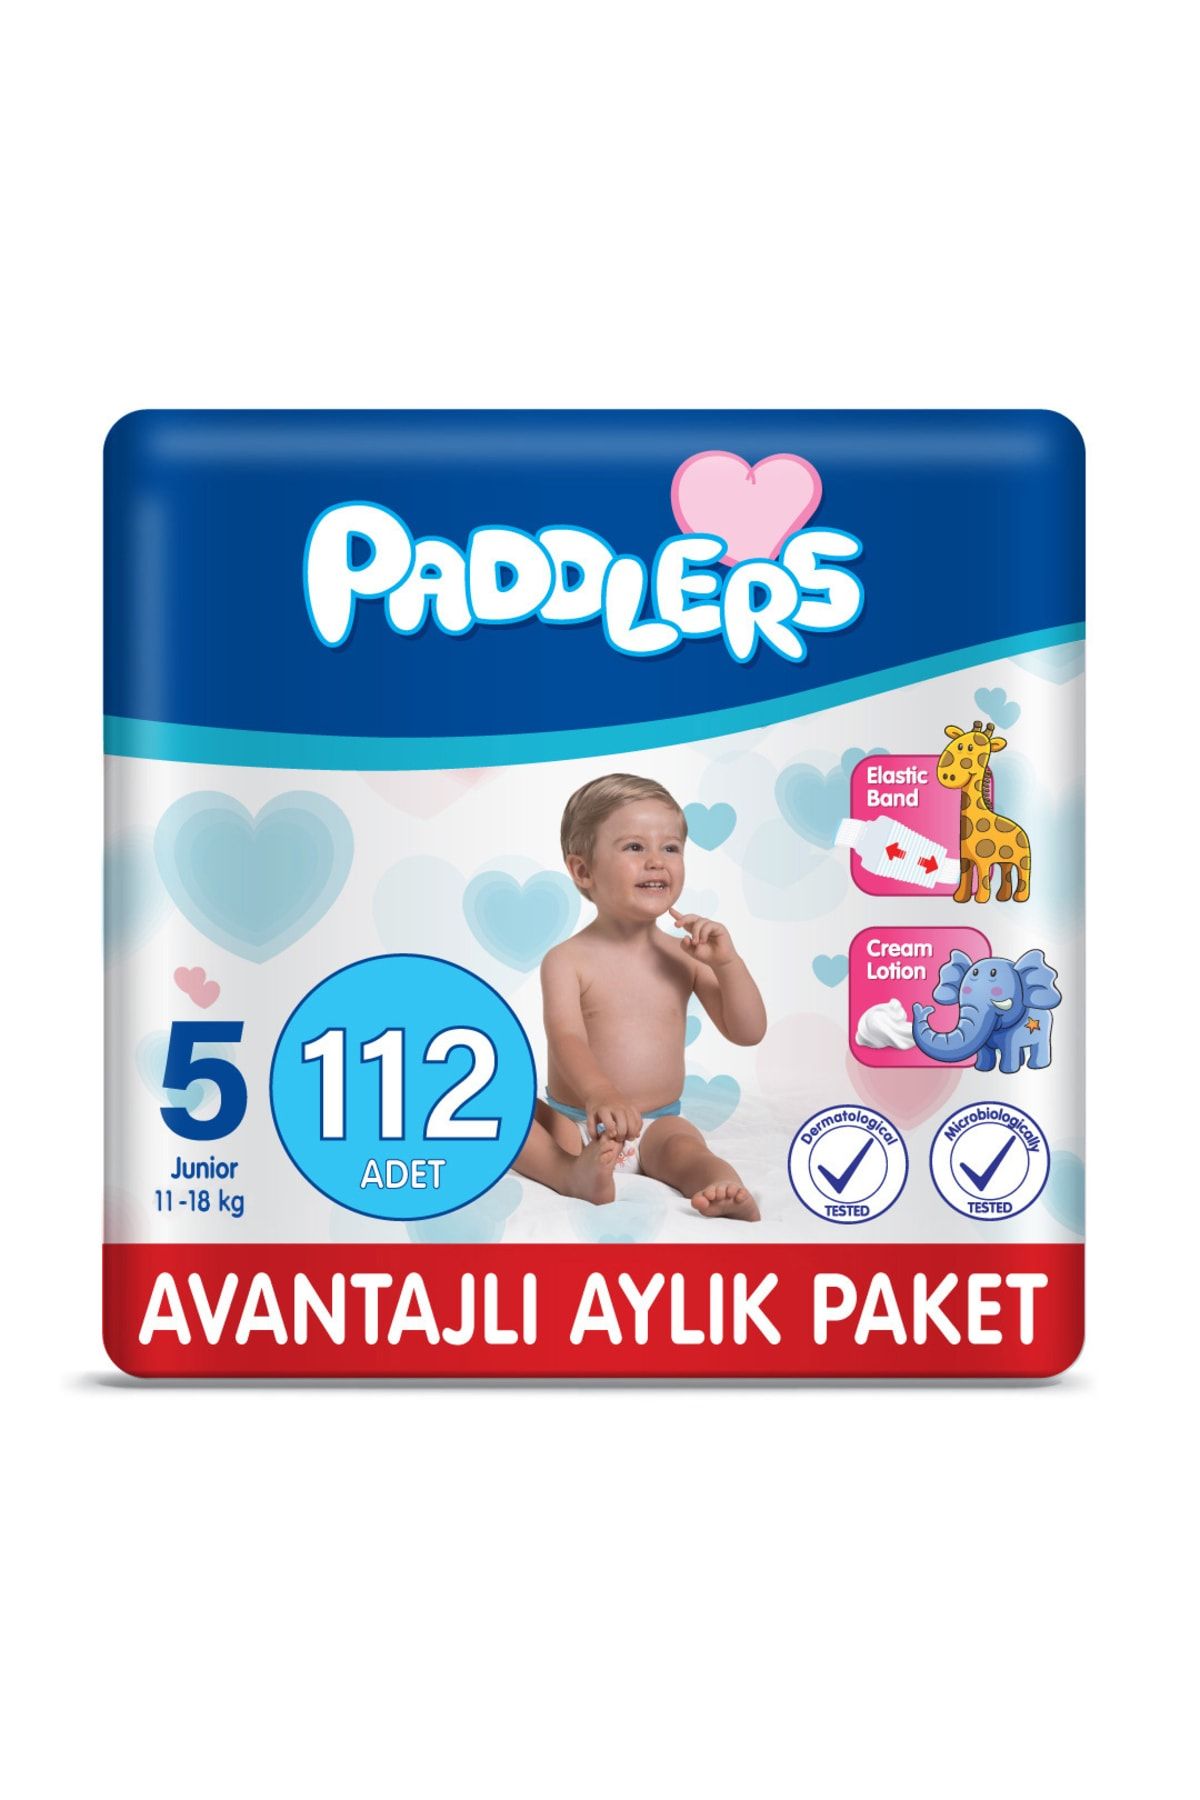 Paddlers Bebek Bezi 5 Numara Junior 112 Adet (11-18 Kg) Aylık Paket